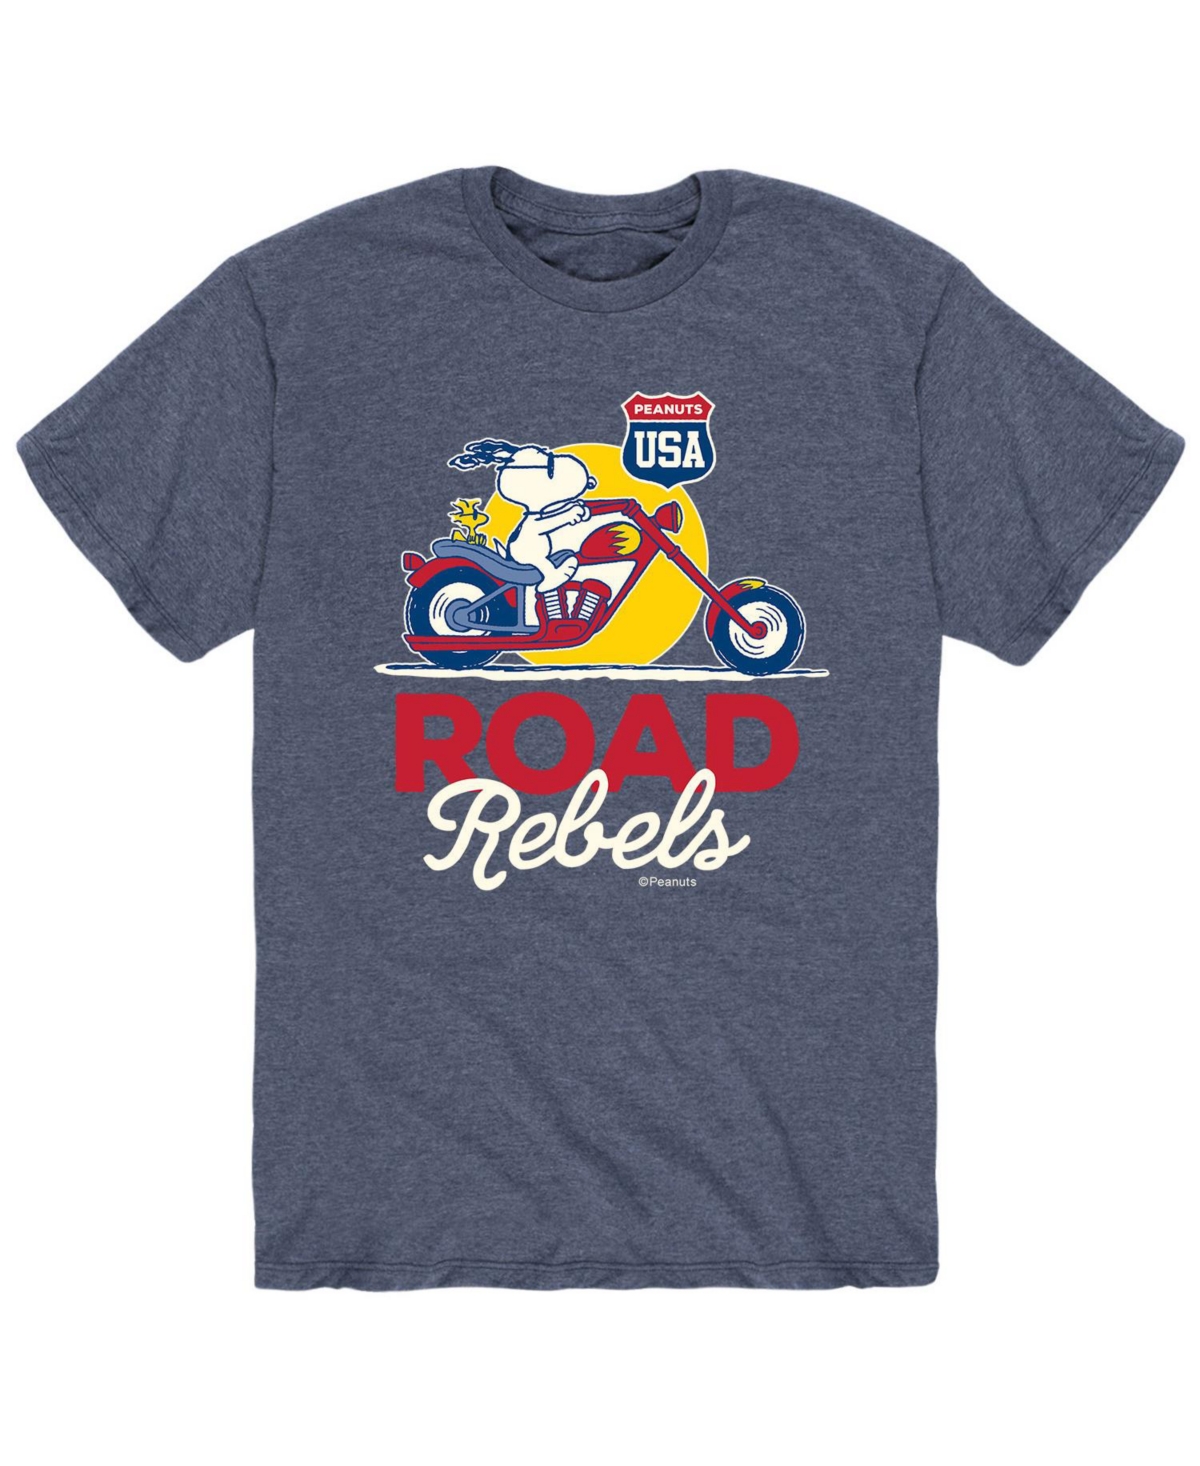 Airwaves Men's Peanuts Road Rebels T-Shirt